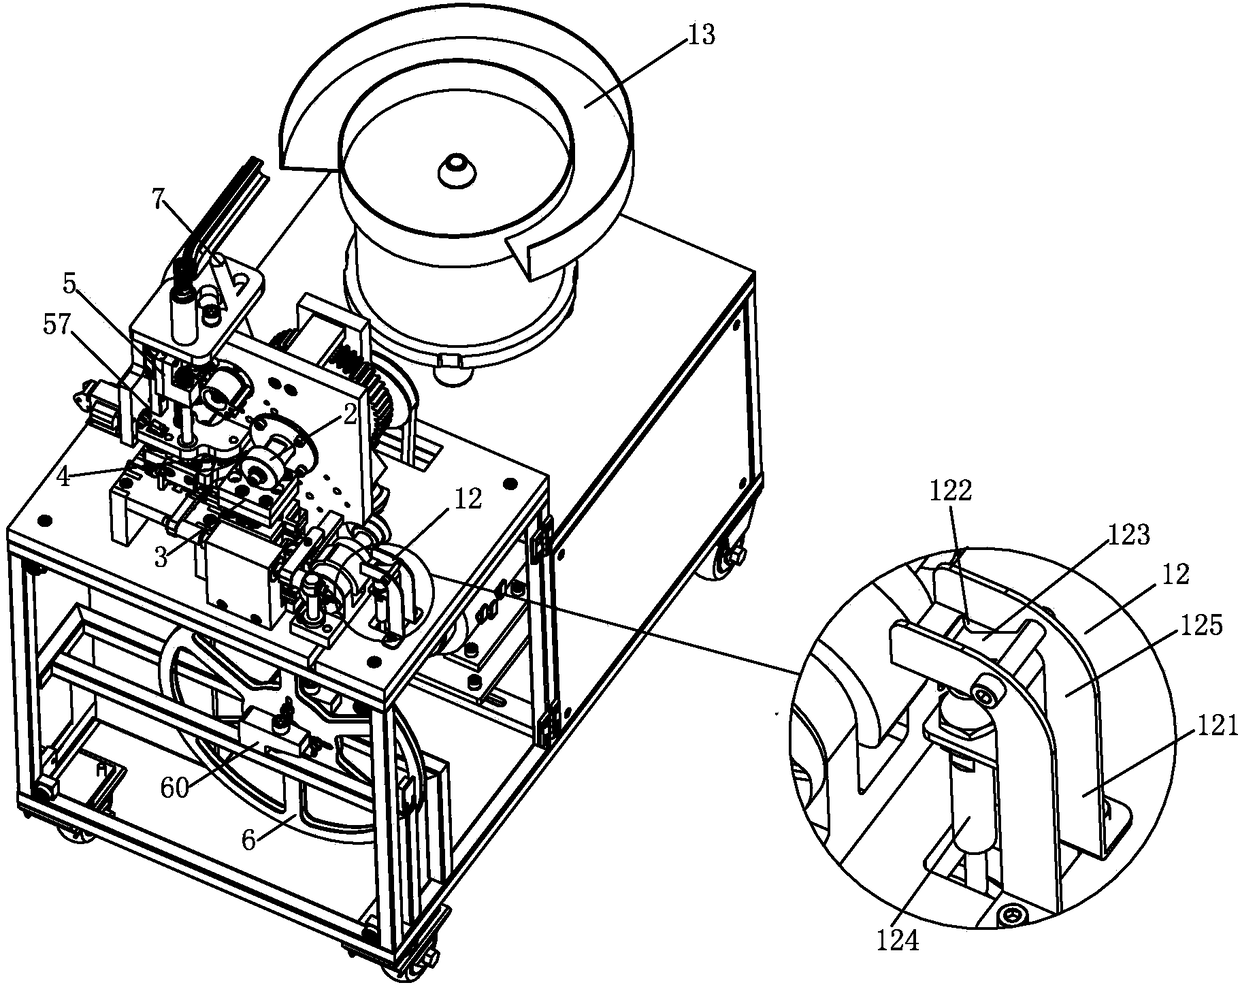 Drawing pin driving mechanism of drawing pin strip forming machine